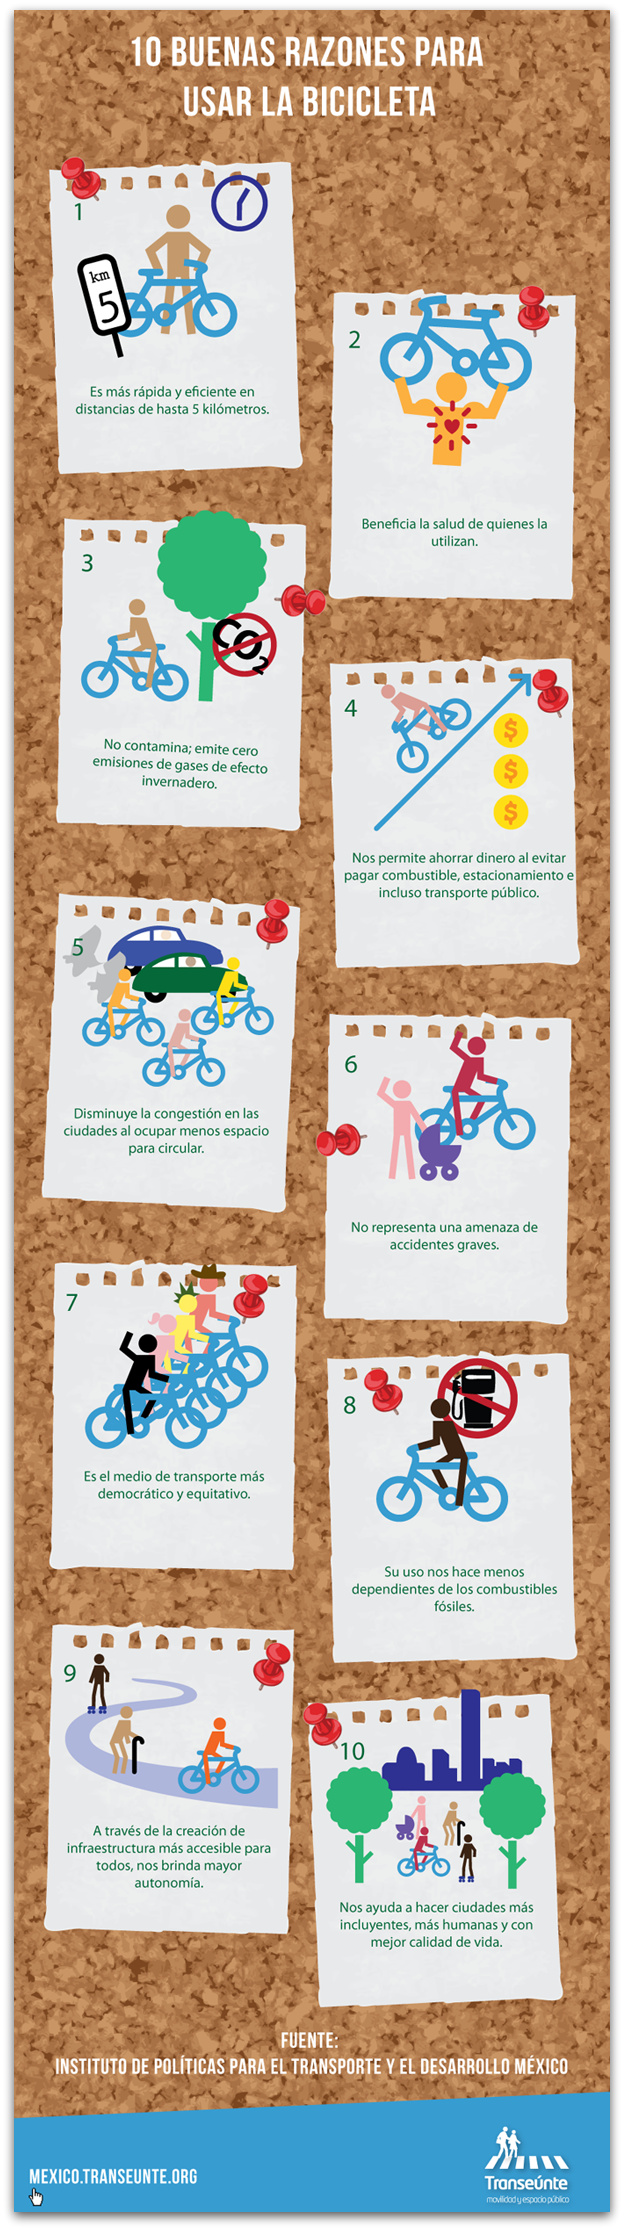 IGNUS Community 10 razones bicicleta2